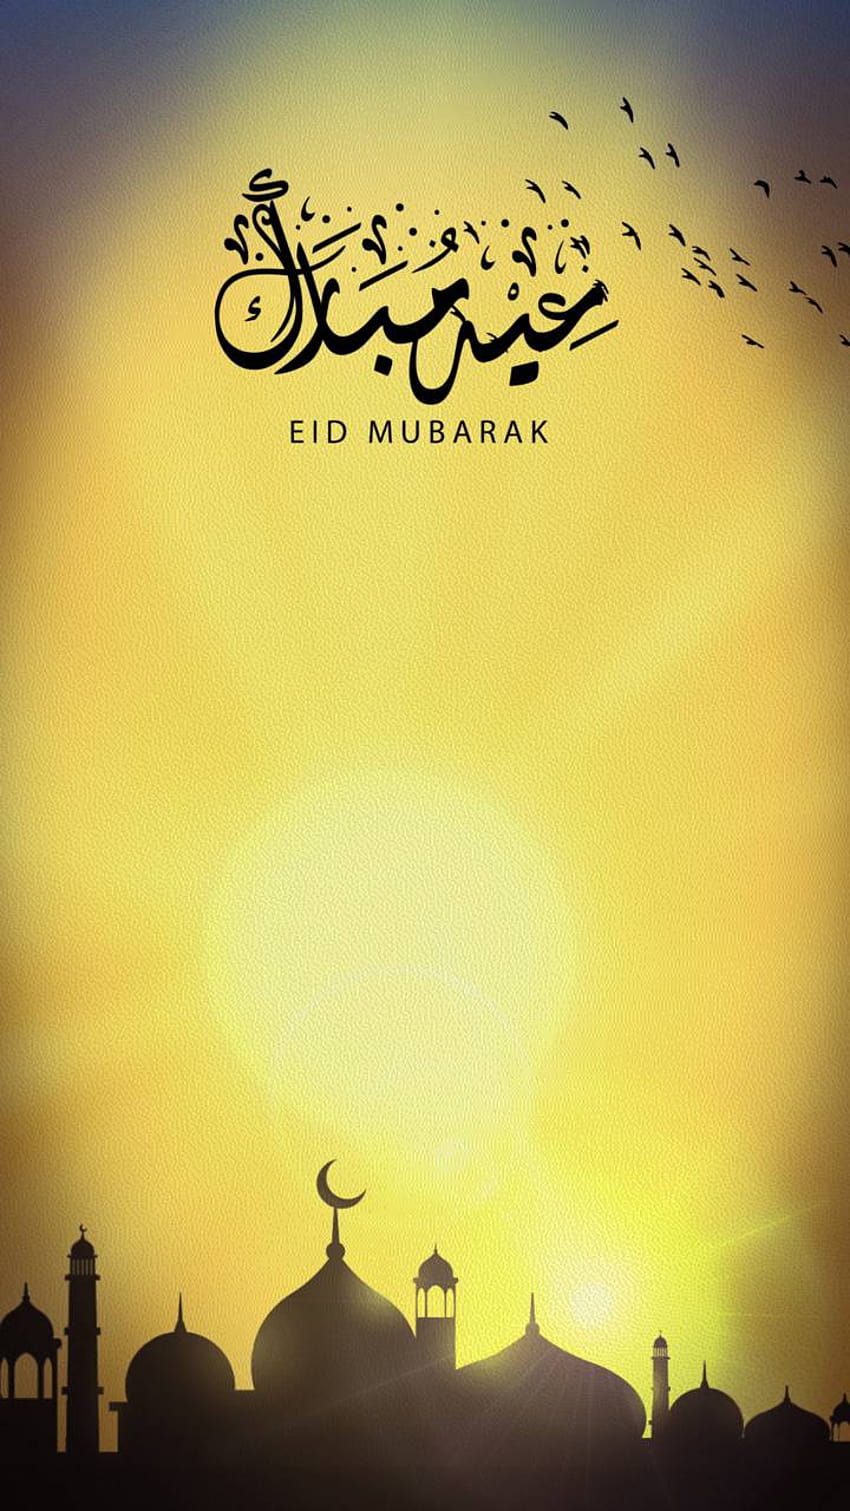 Idul Fitri oleh OsNaR187, lebaran mubarak 2021 wallpaper ponsel HD